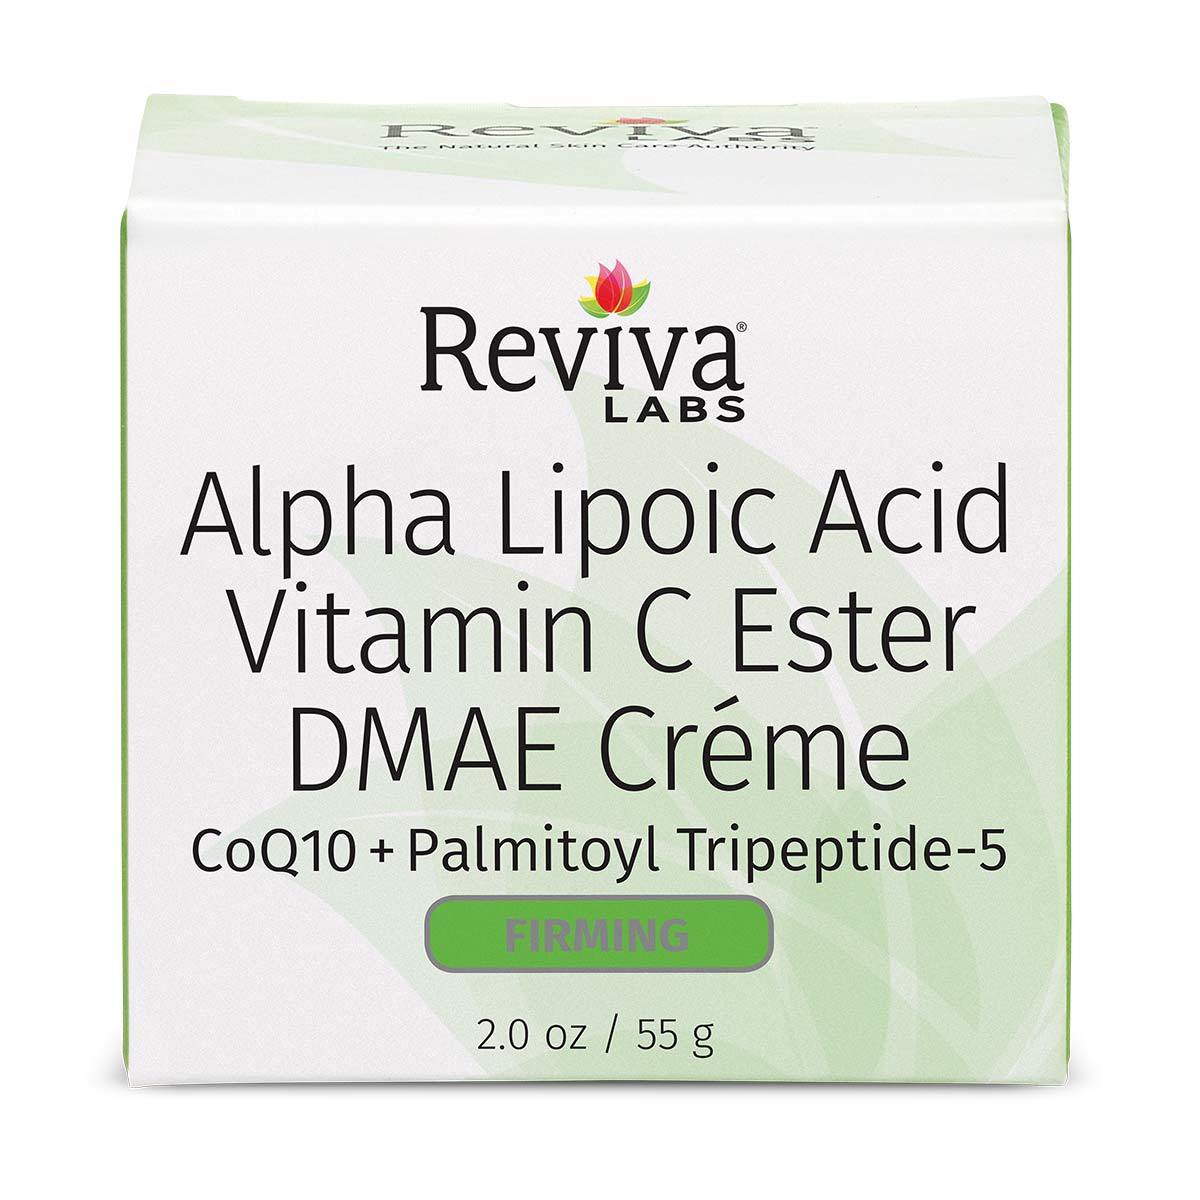 Primary image of Alpha Lipoic, Vitamin C Ester + DMAE Night Cream